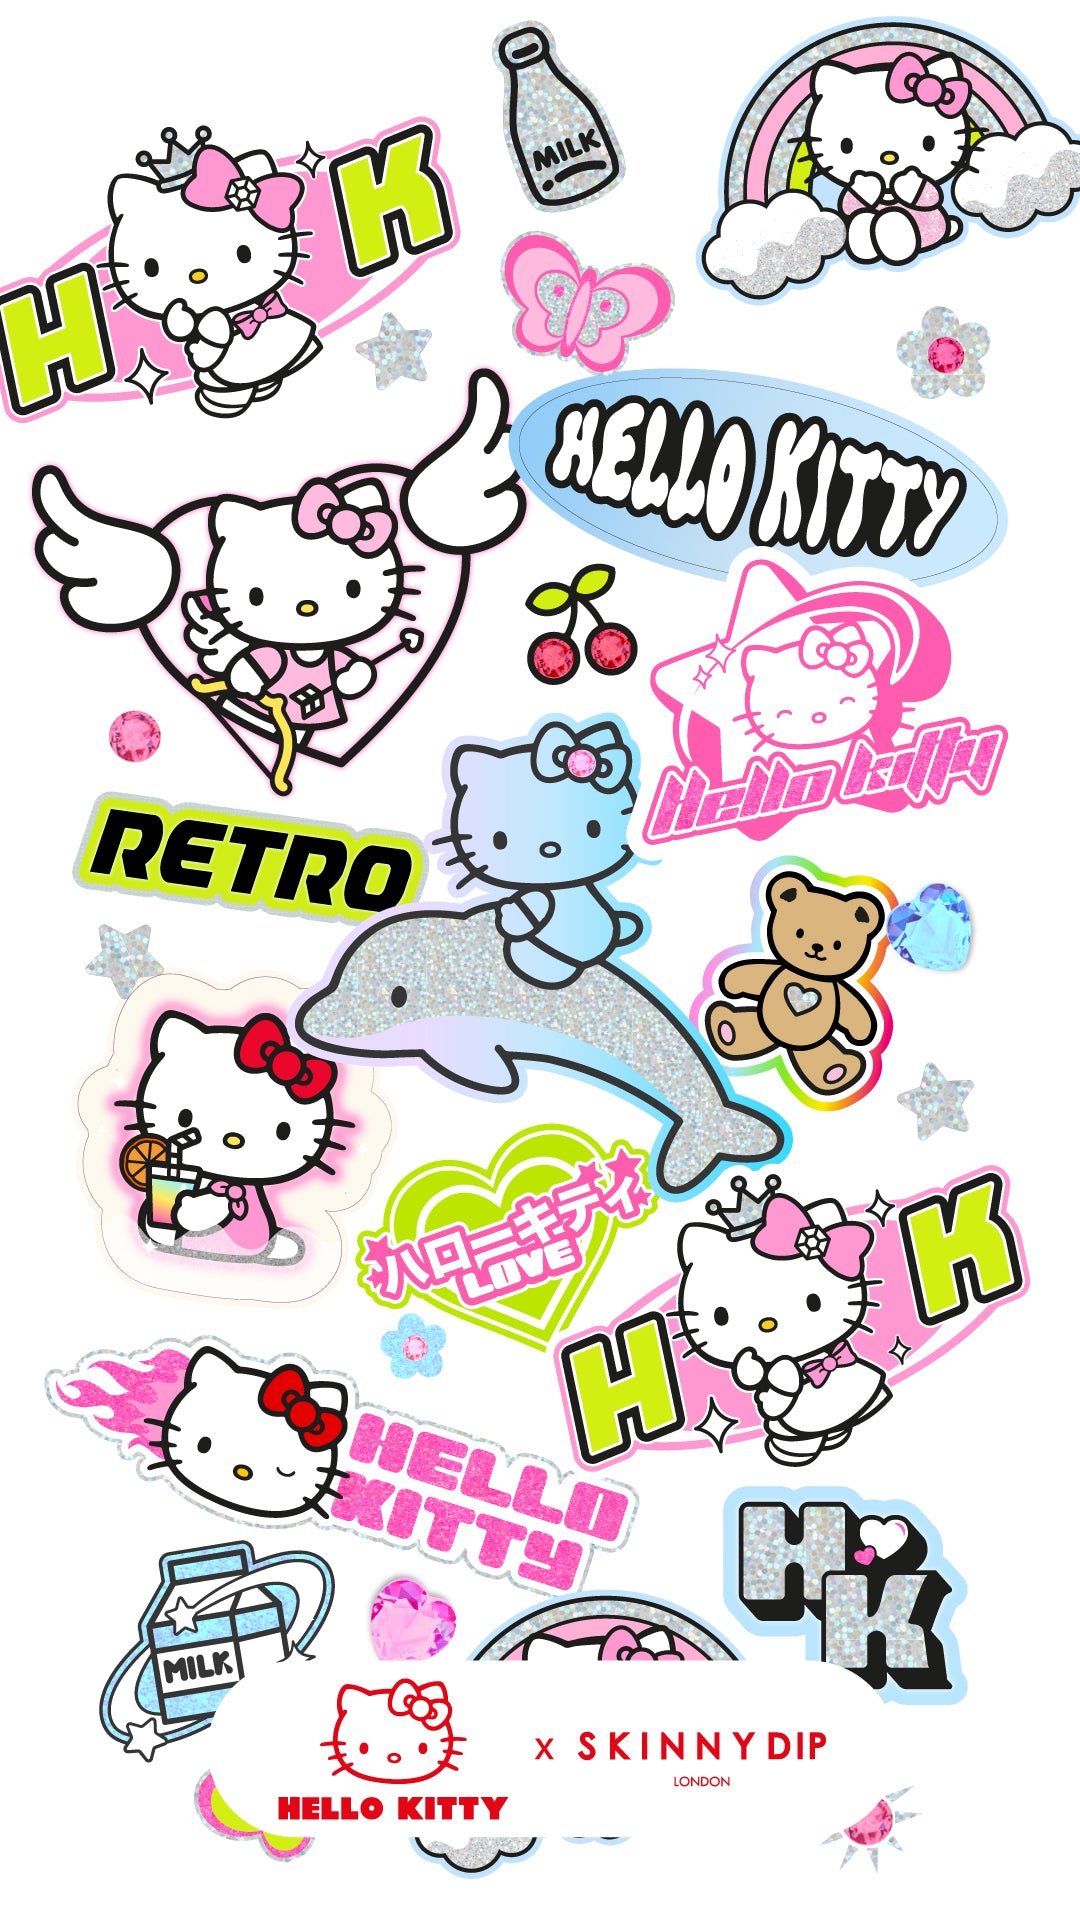 Hello Kitty x Skinnydip Drop 2 Phone Wallpaper 09